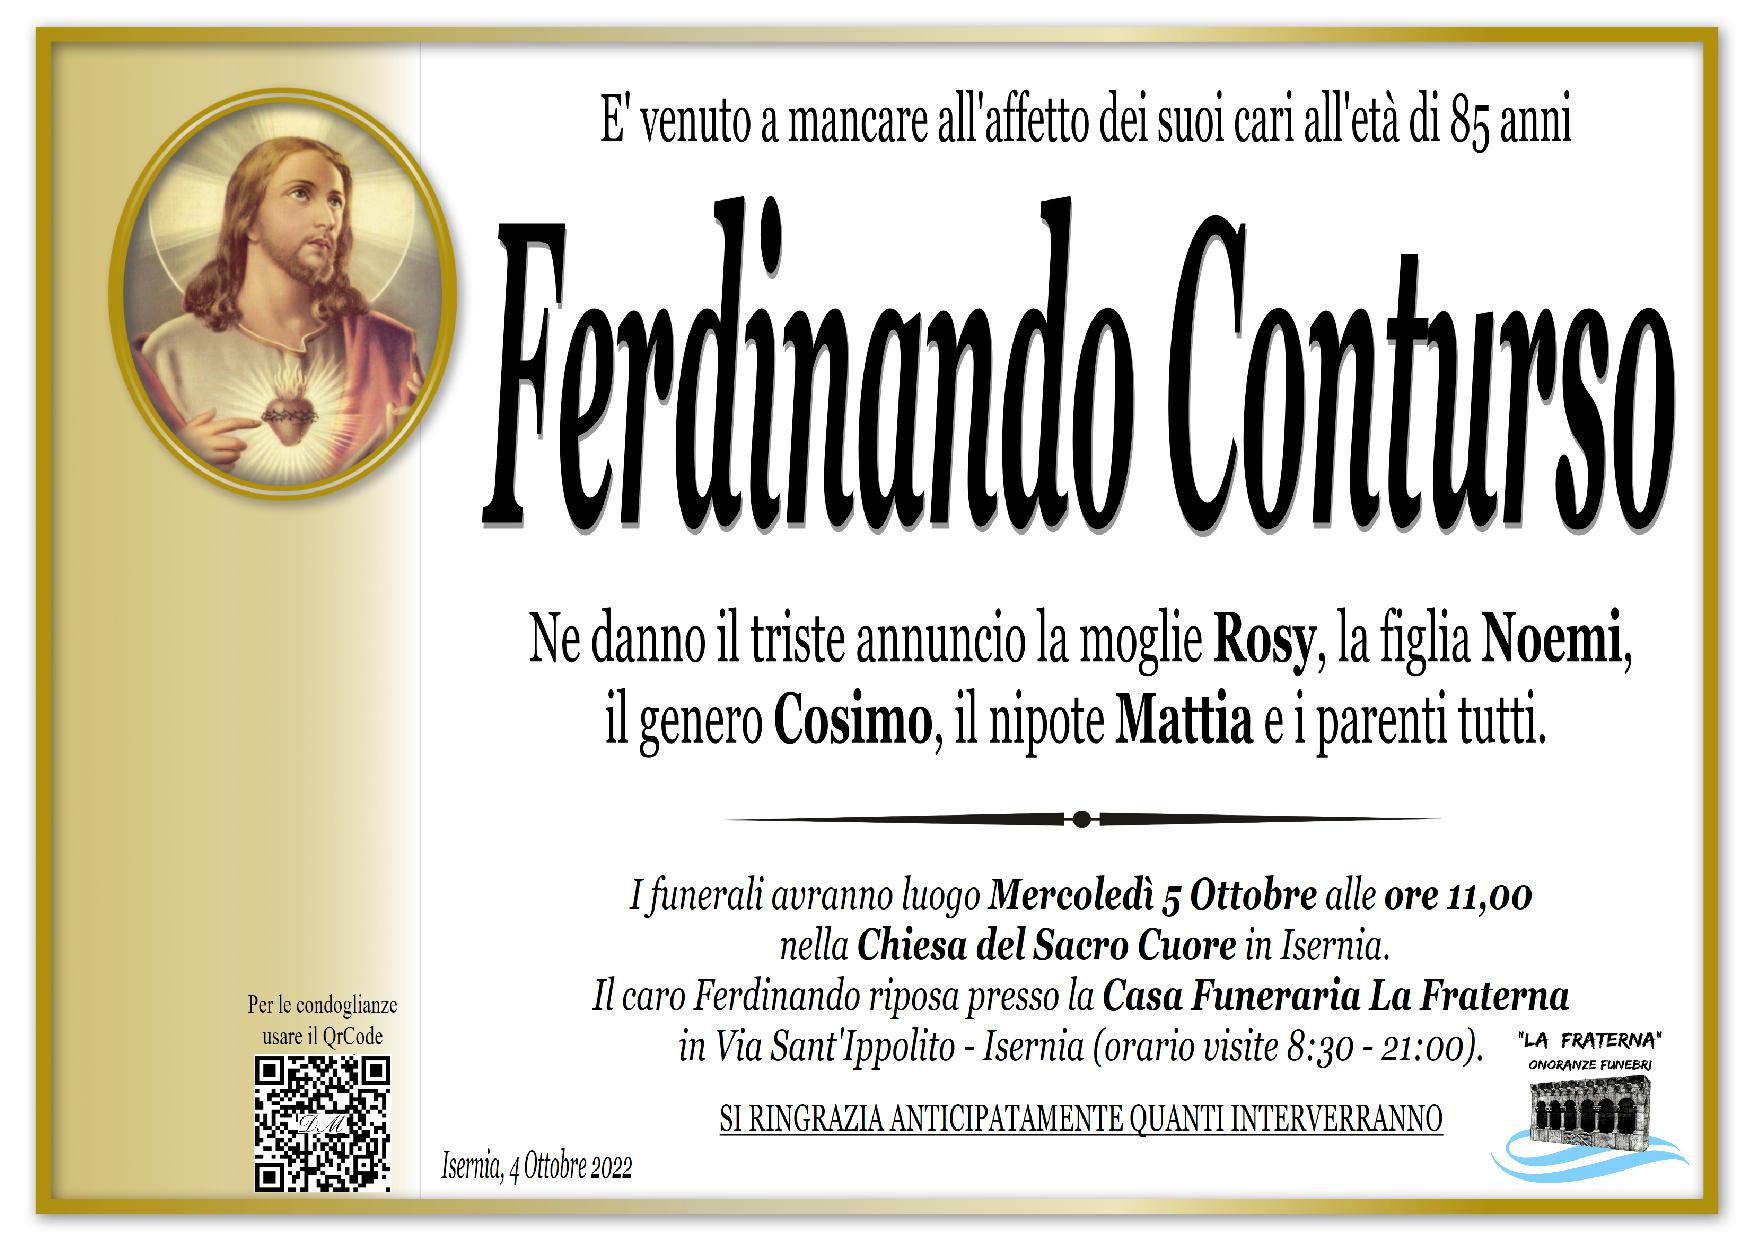 necrologio Ferdinando Conturso